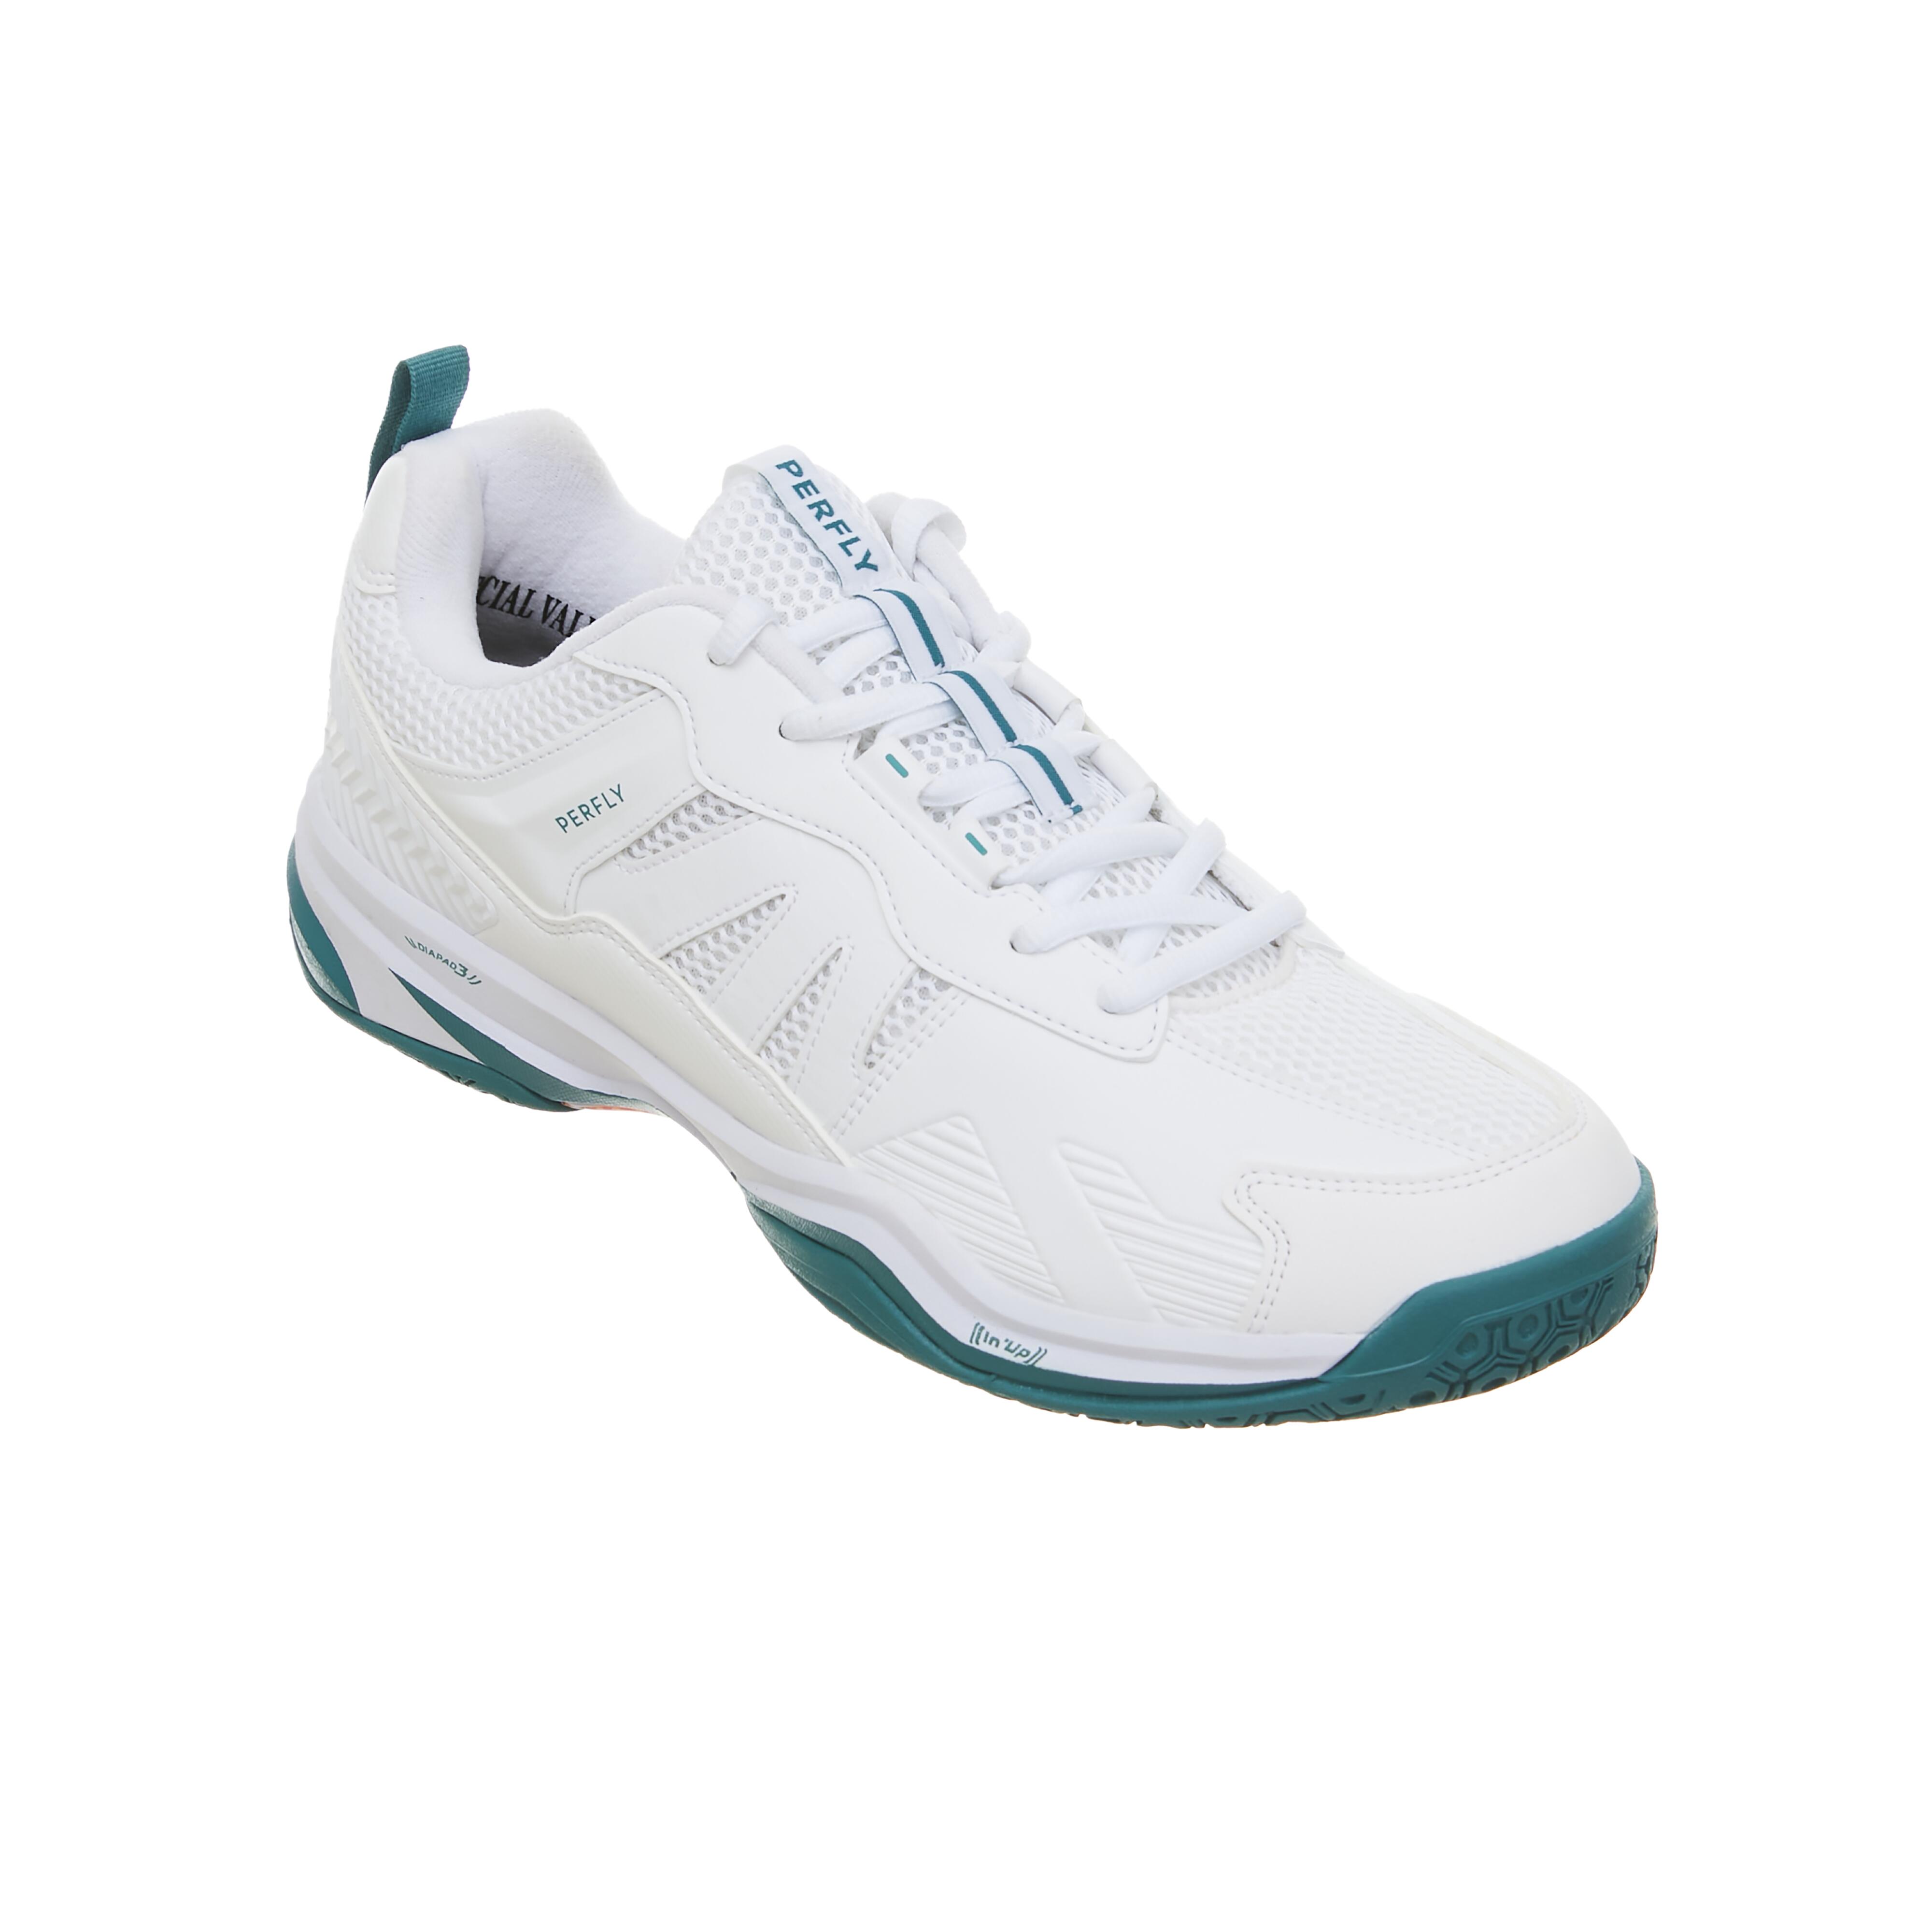 NoName first walkers White/Pink 16                  EU discount 94% KIDS FASHION Footwear Sports 